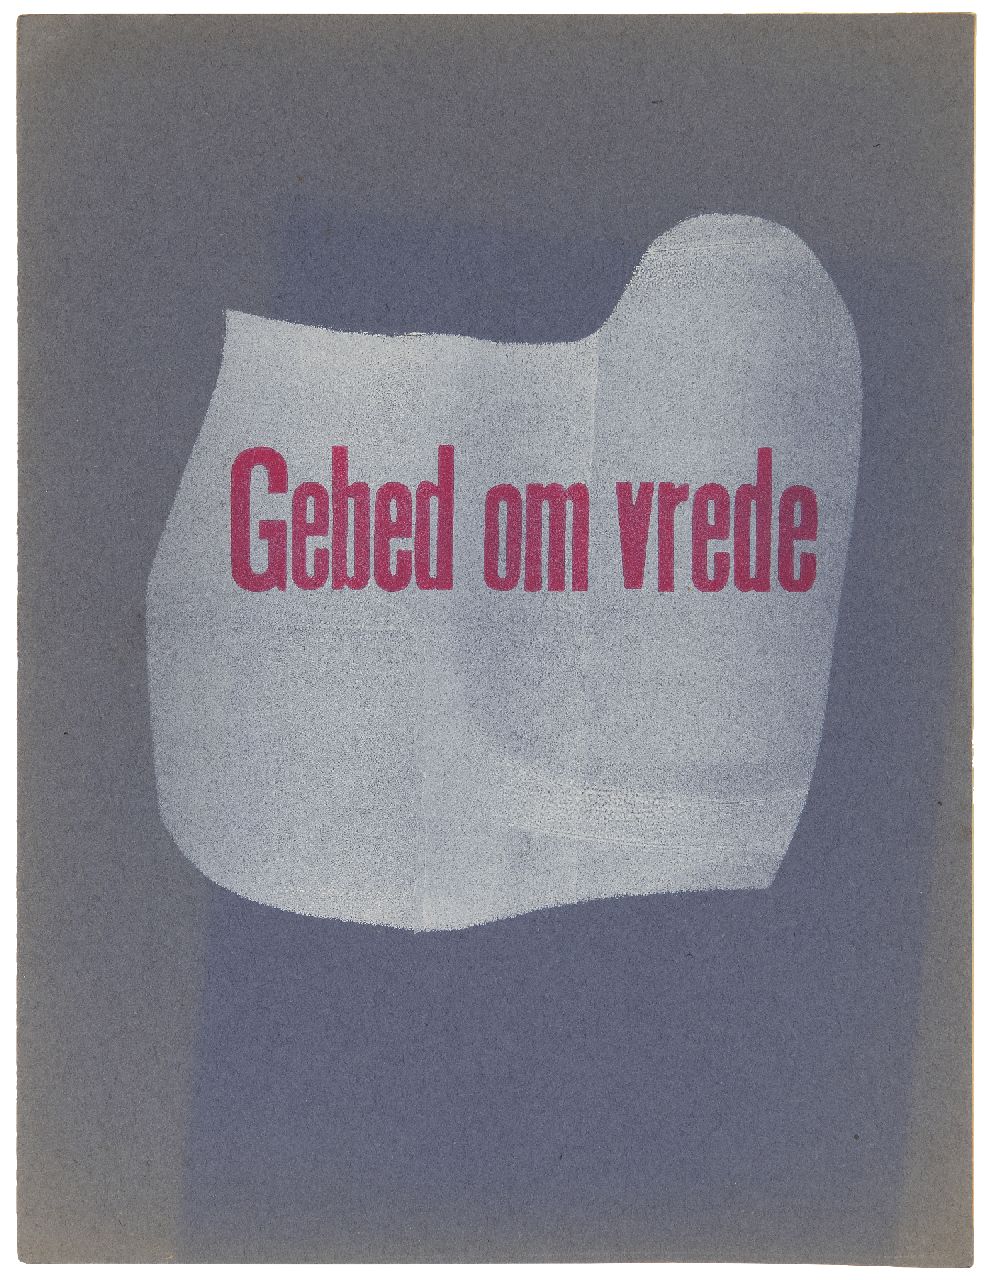 Werkman H.N.  | Hendrik Nicolaas Werkman |  offered for sale | De Blauwe Schuit: Prayer for peace, stencil print on paper 29.2 x 22.0 cm, dated May 1943